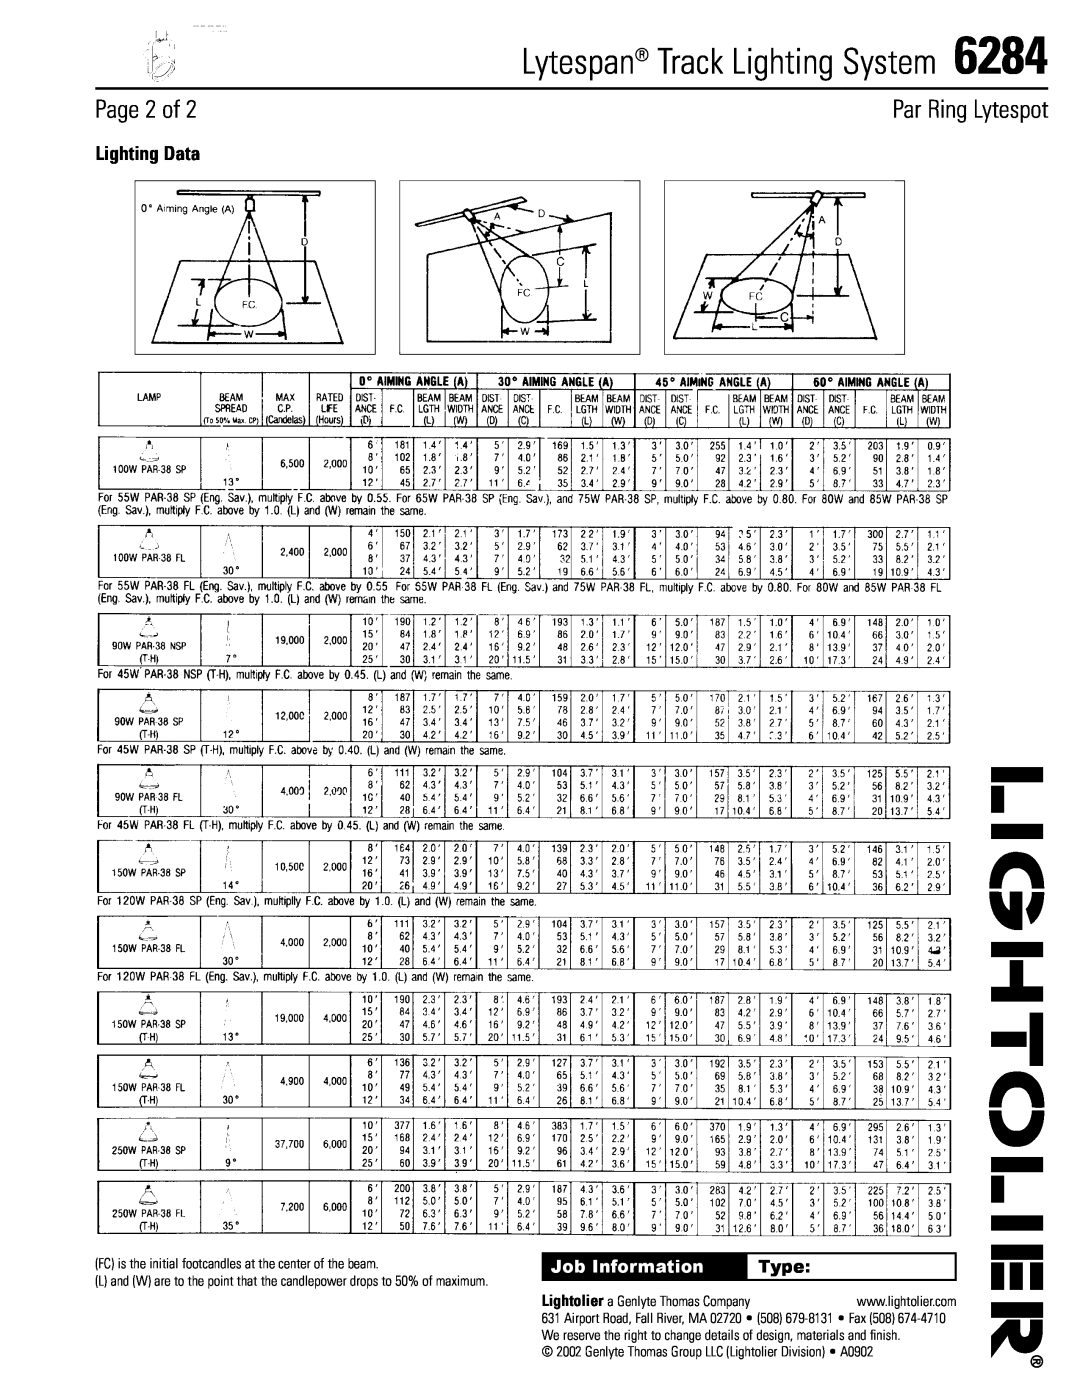 Lightolier 6284 Page 2 of, Lighting Data, Type, Lytespan Track Lighting System, Par Ring Lytespot, Job Information 